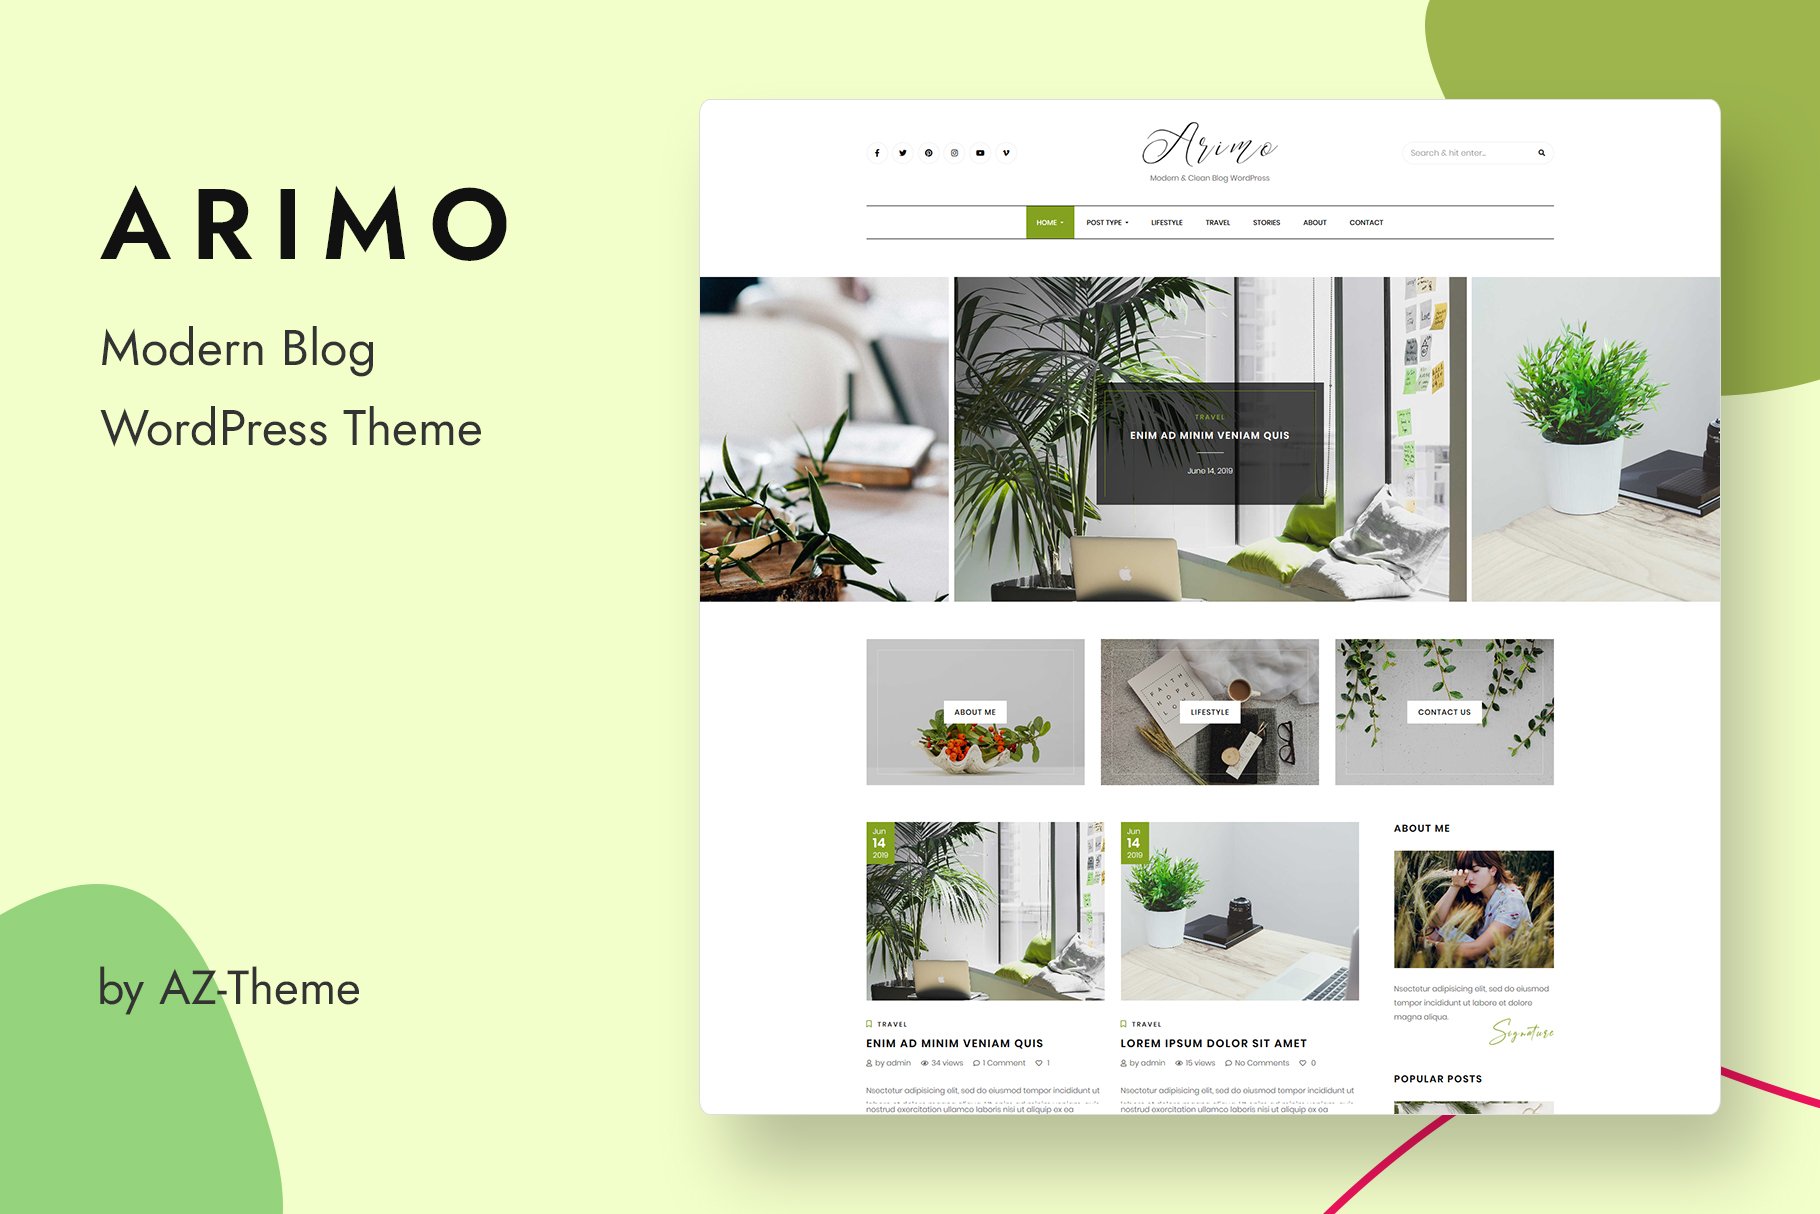 Modern Blog WordPress Theme - Arimo cover image.